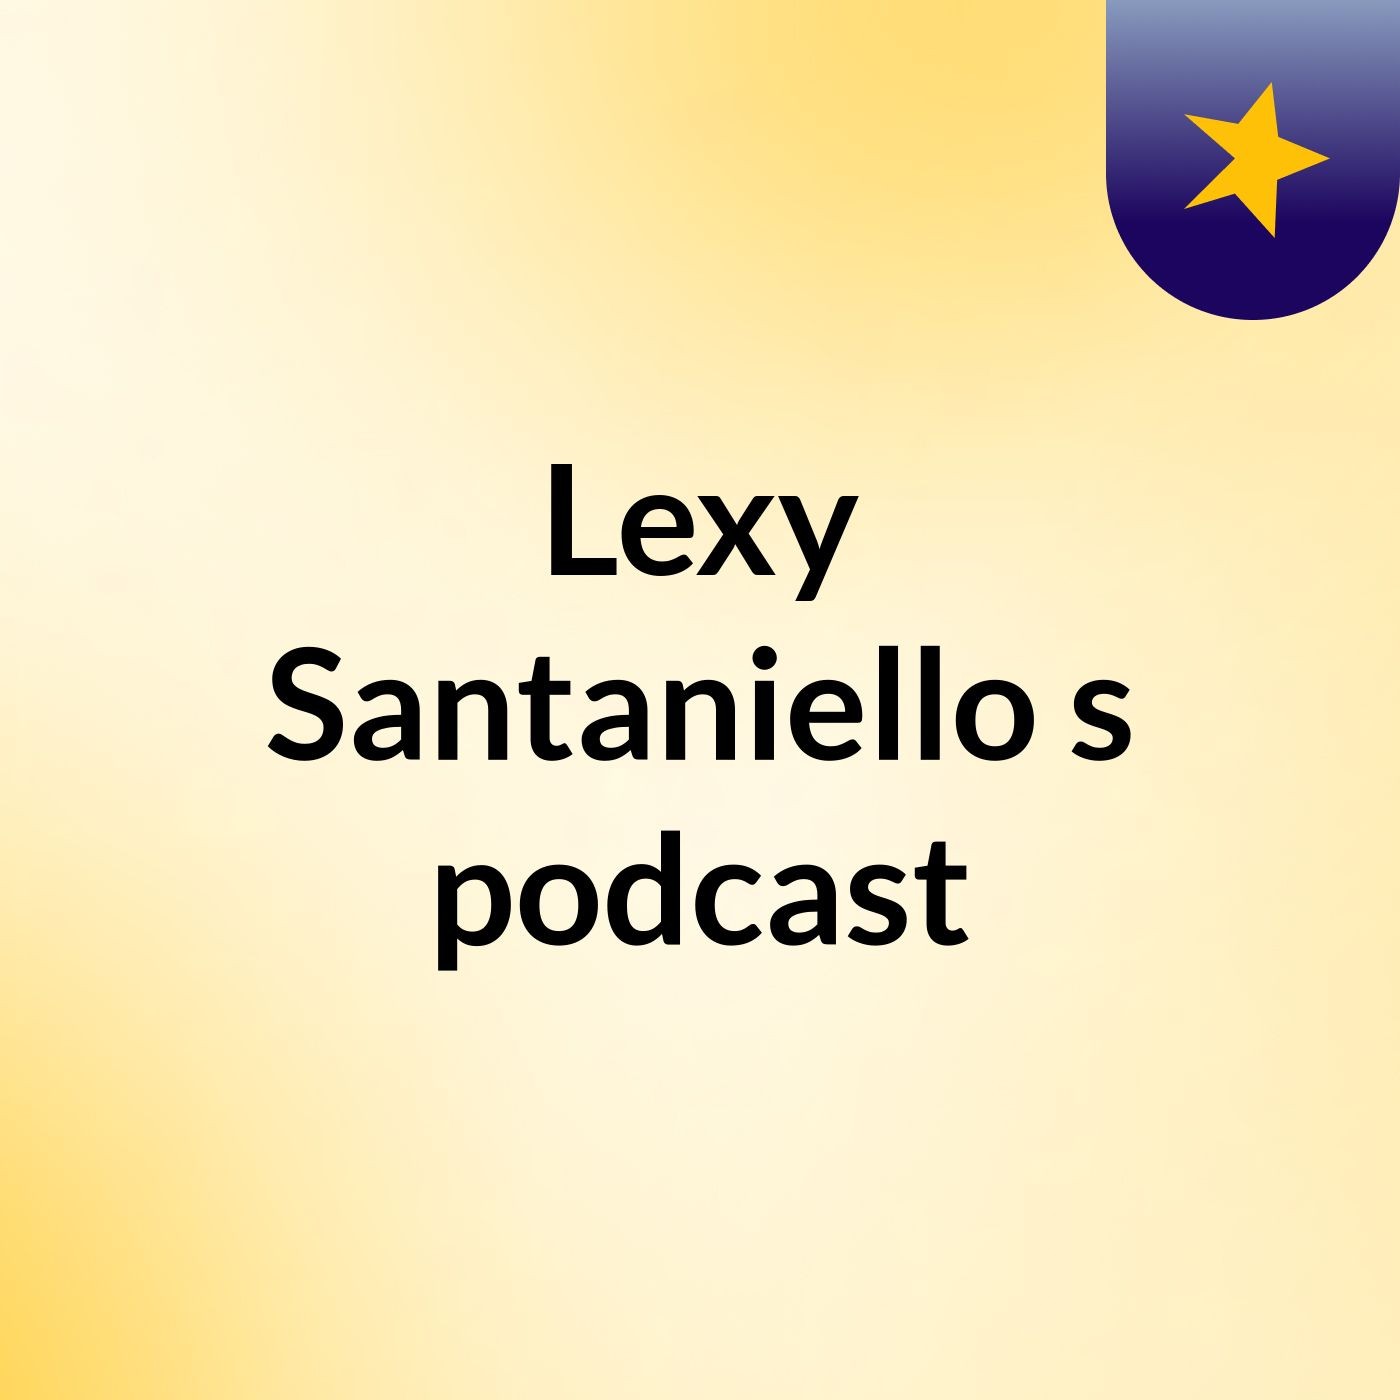 Lexy Santaniello's podcast